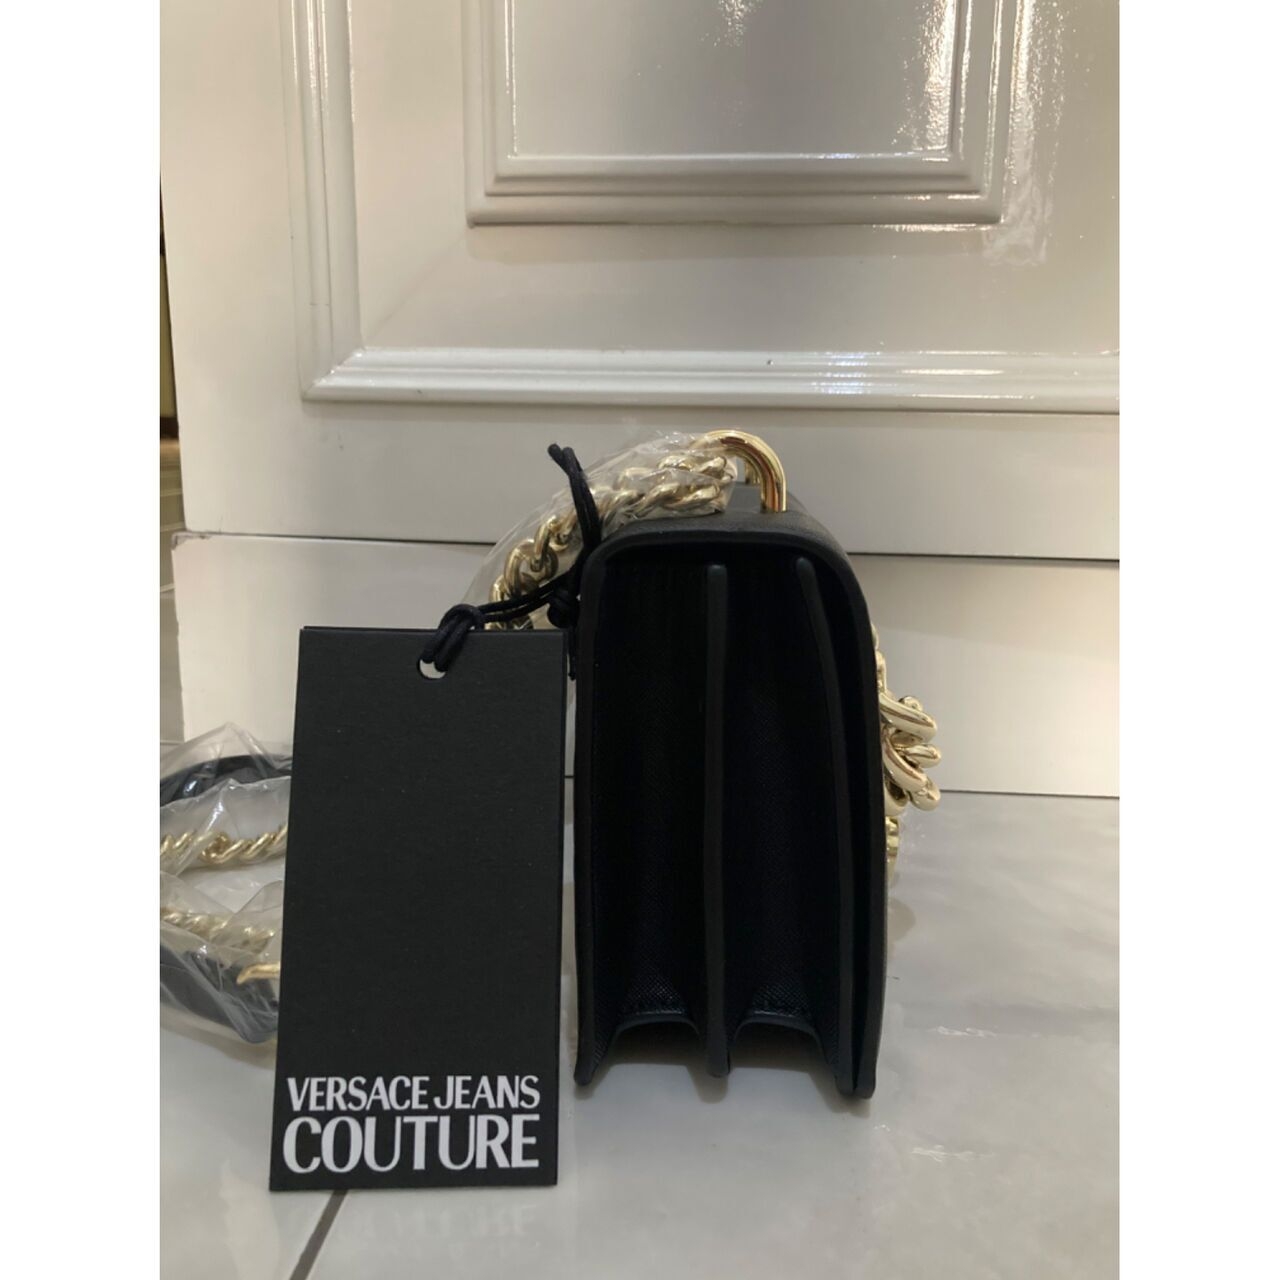 Versace Jeans Couture Logo Charm Black Chain Crossbody Bag